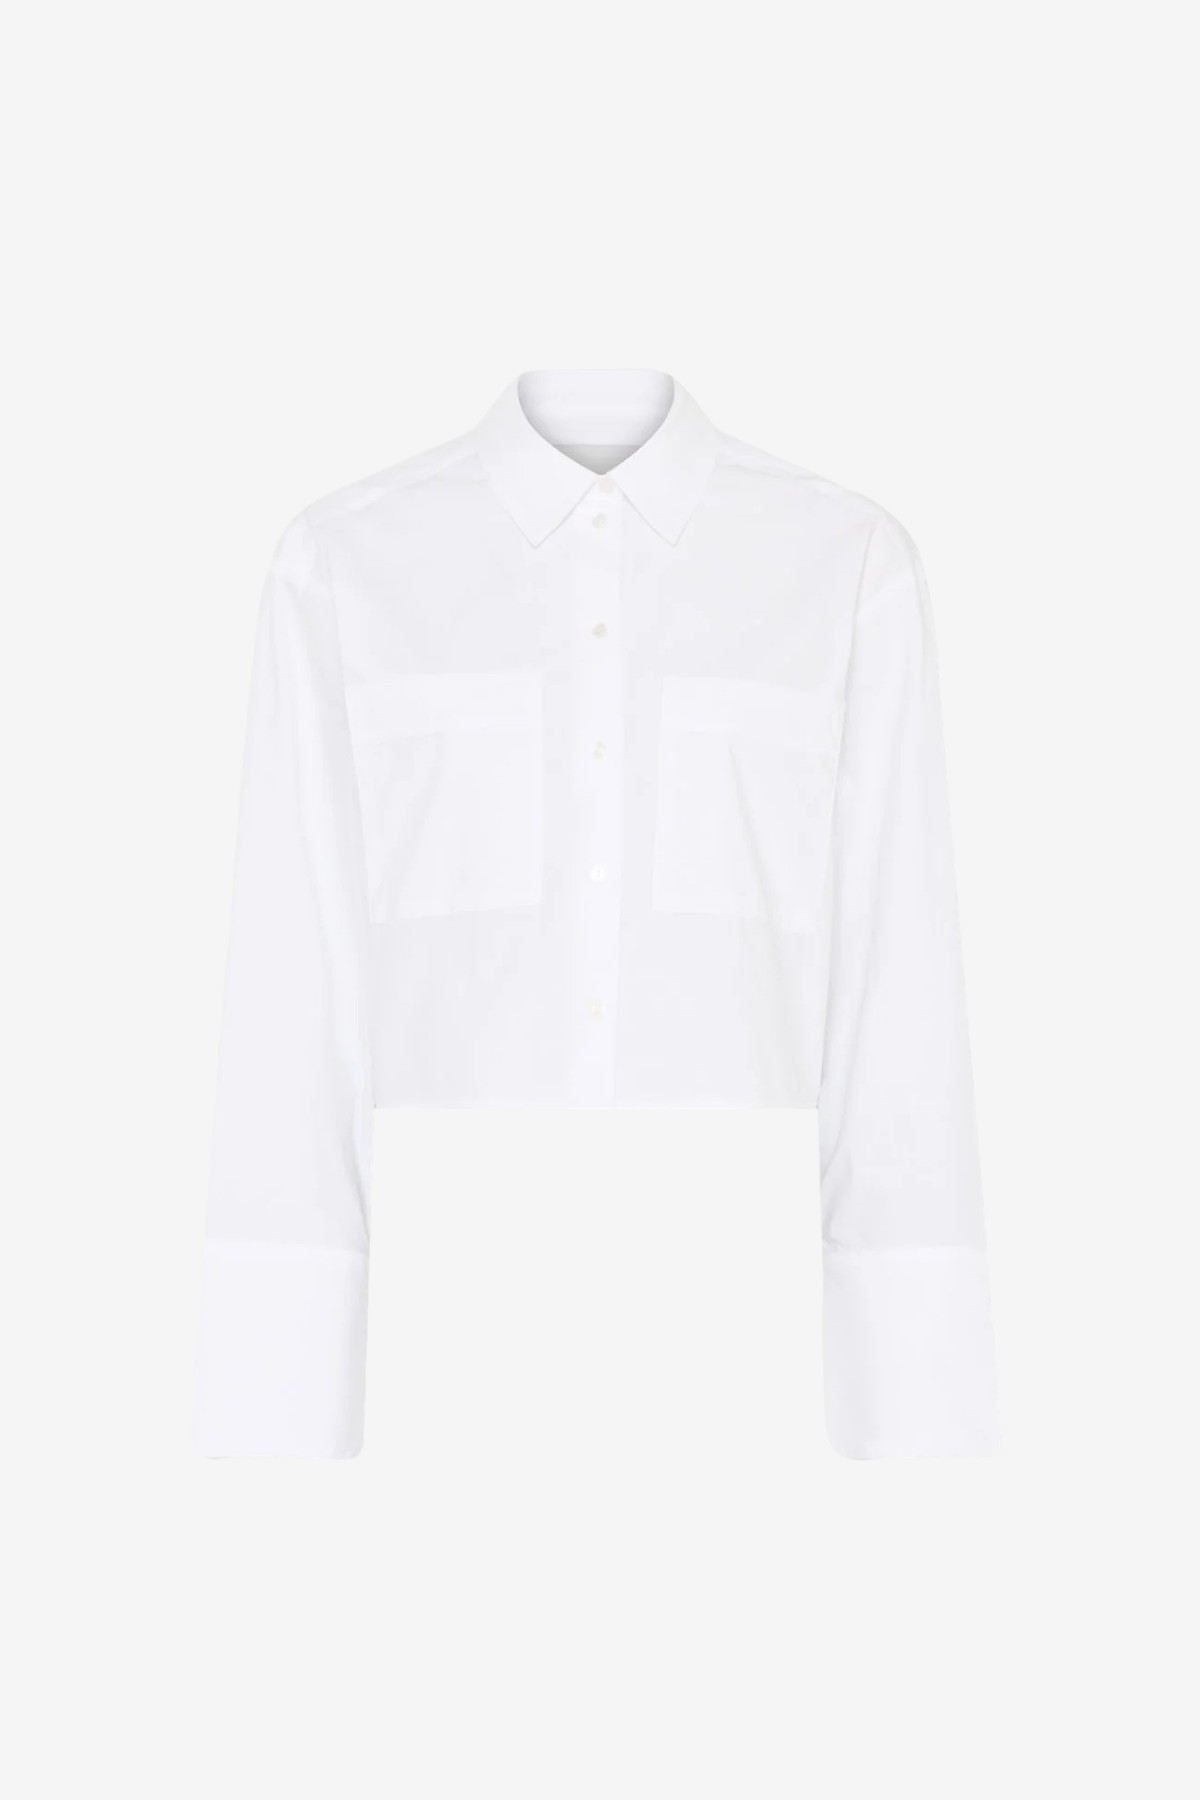 Herskind Samuel Shirt in White